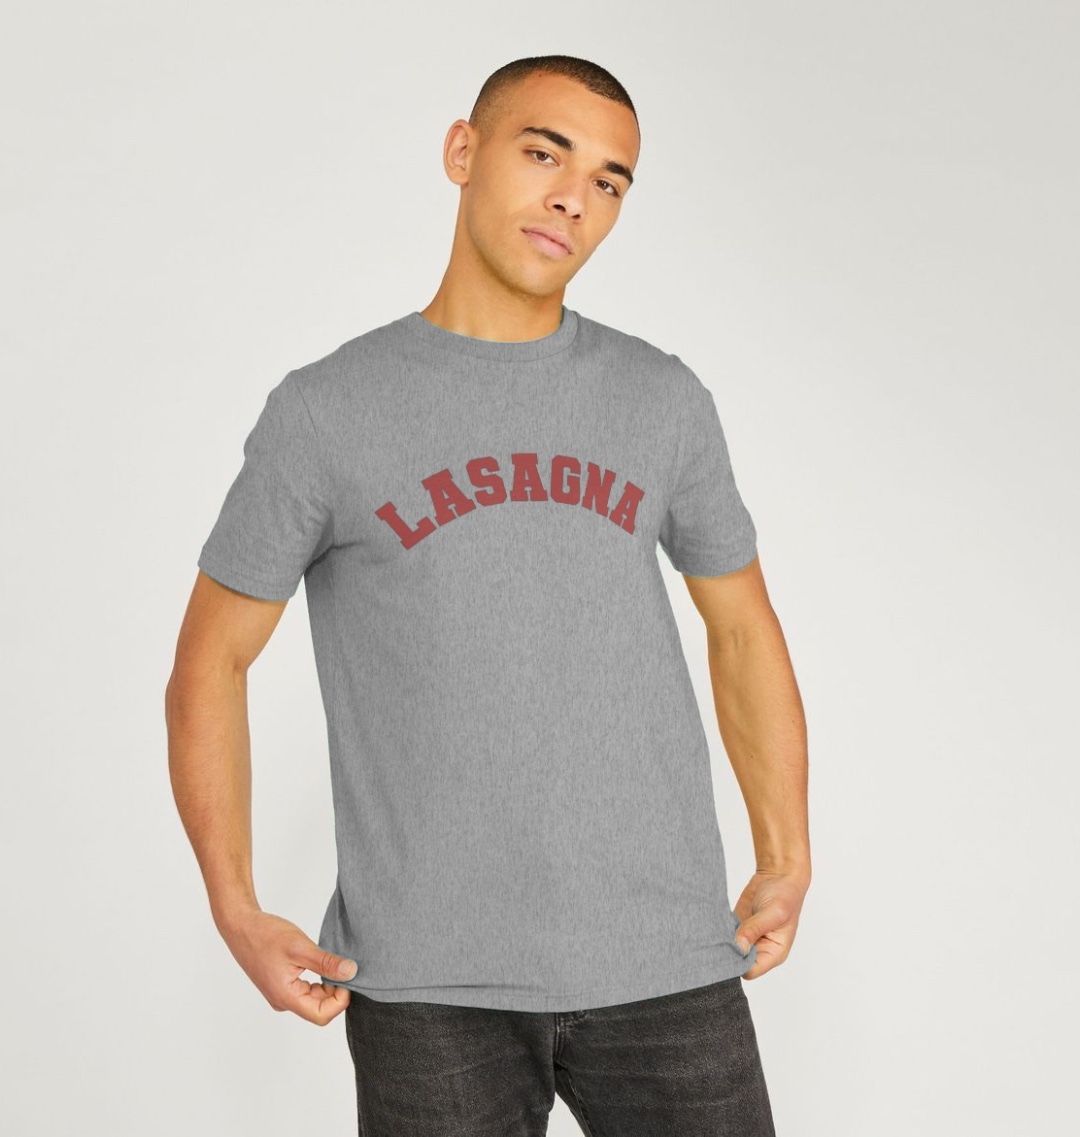 Lasagna varsity t-shirt